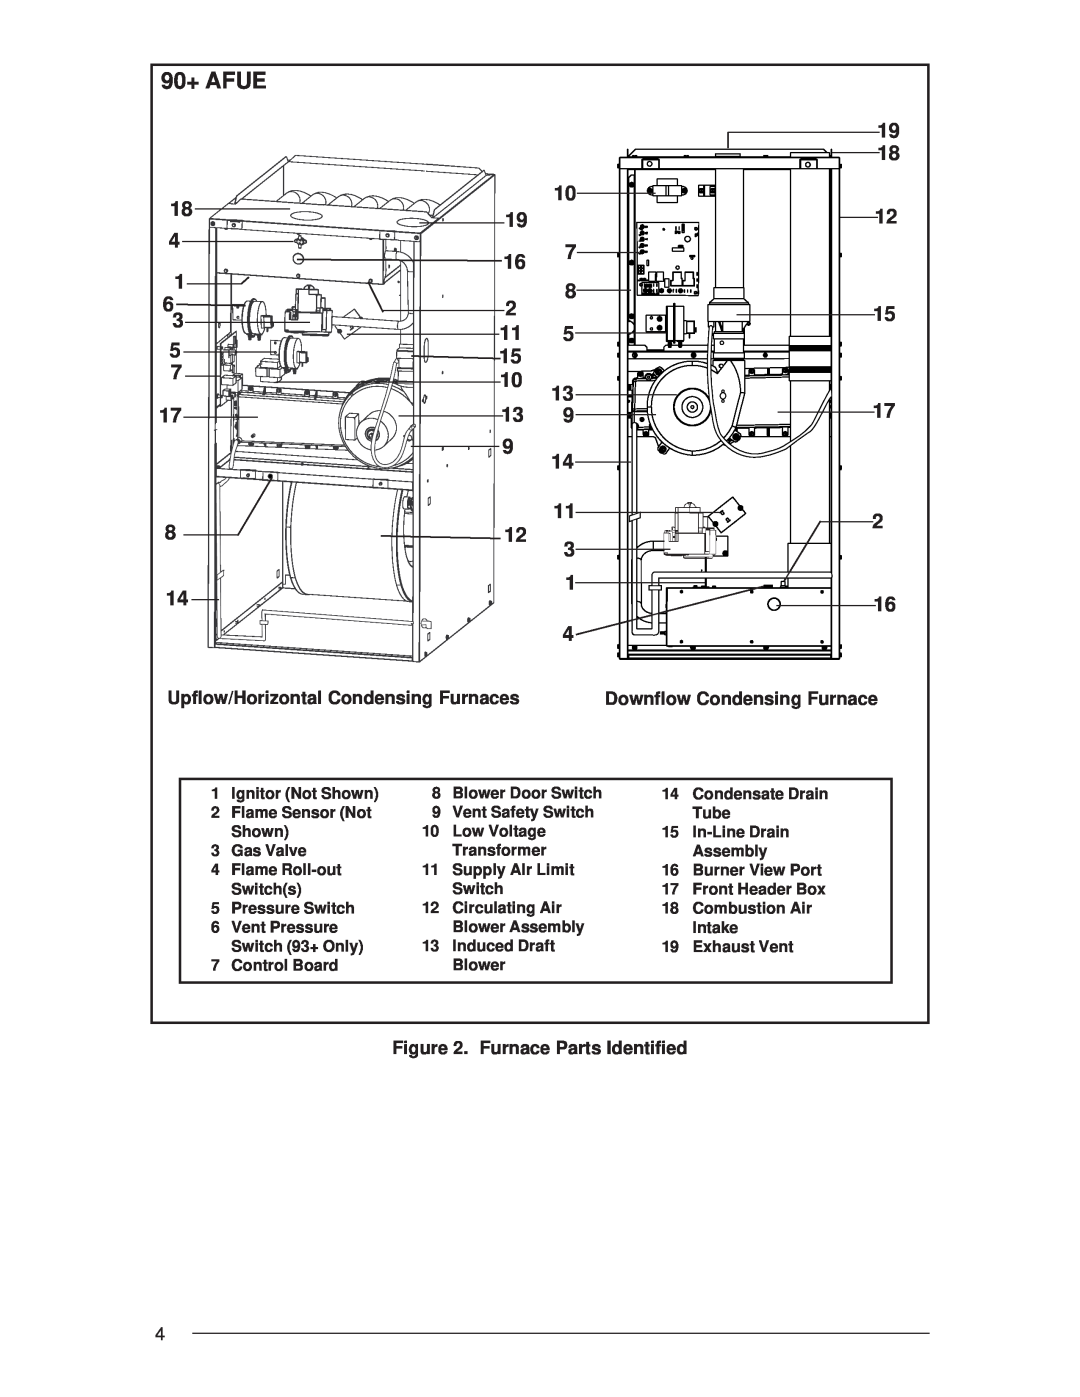 Nordyne Residential Gas Furnaces manual 90+ AFUE, Upflow/Horizontal Condensing Furnaces, Furnace Parts Identified 